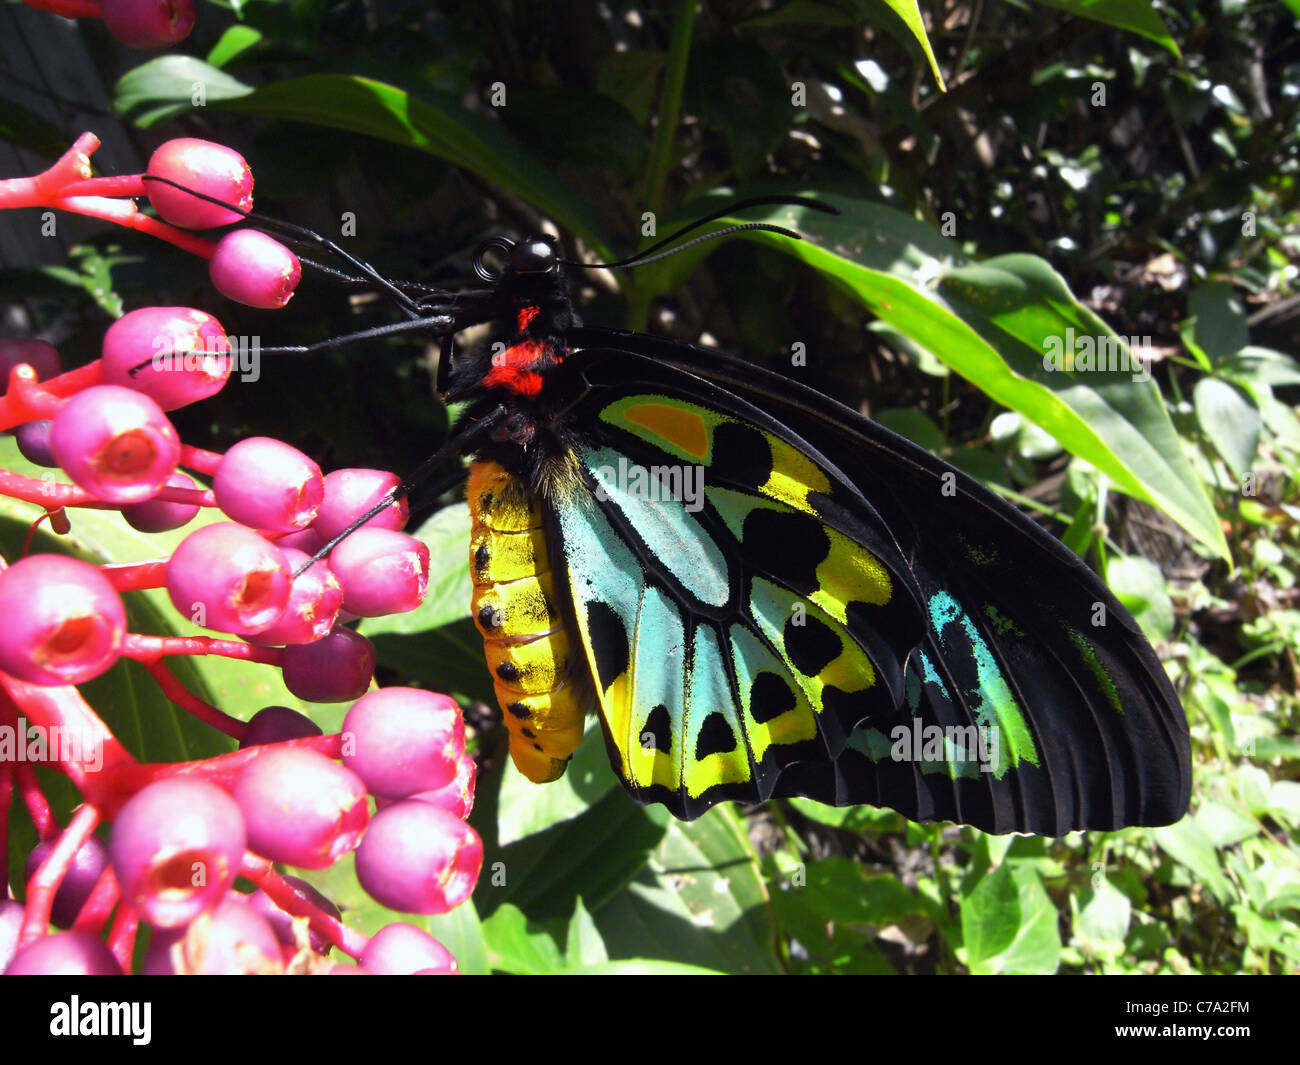 Appena emerso maschio Papilionidae Cairns butterfly (Ornithoptera euphorion) su Medinilla sp. bacche, Cairns, Queensland, Australia Foto Stock